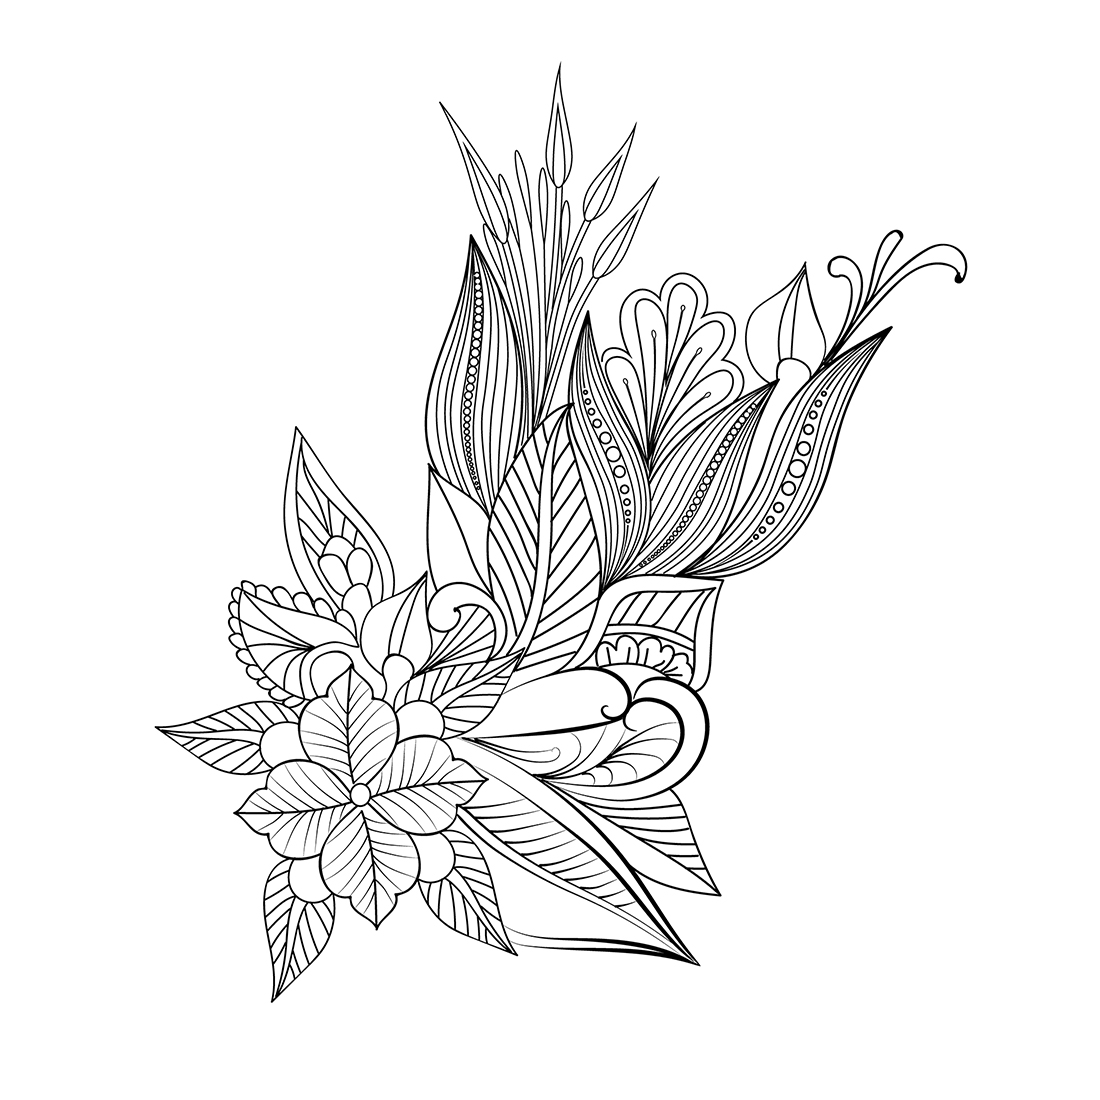 Doodle flower art, doodle flower art drawing, doodle flower drawing, flower drawing doodle art zentangle art, doodle flower coloring pages preview image.